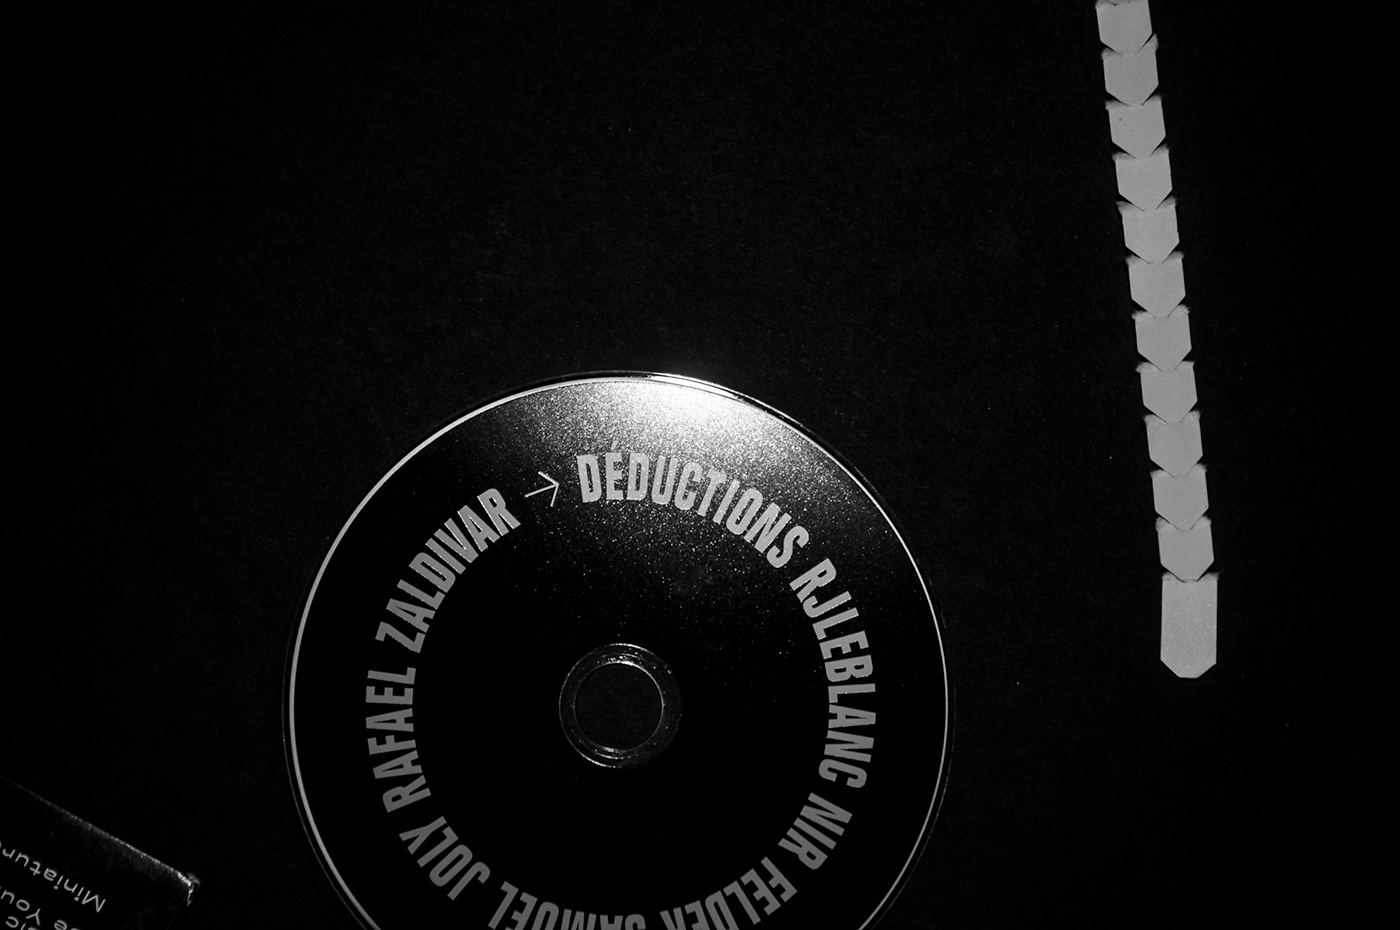 jazz Album cover cd Montreal music black bass deductions rj leblanc